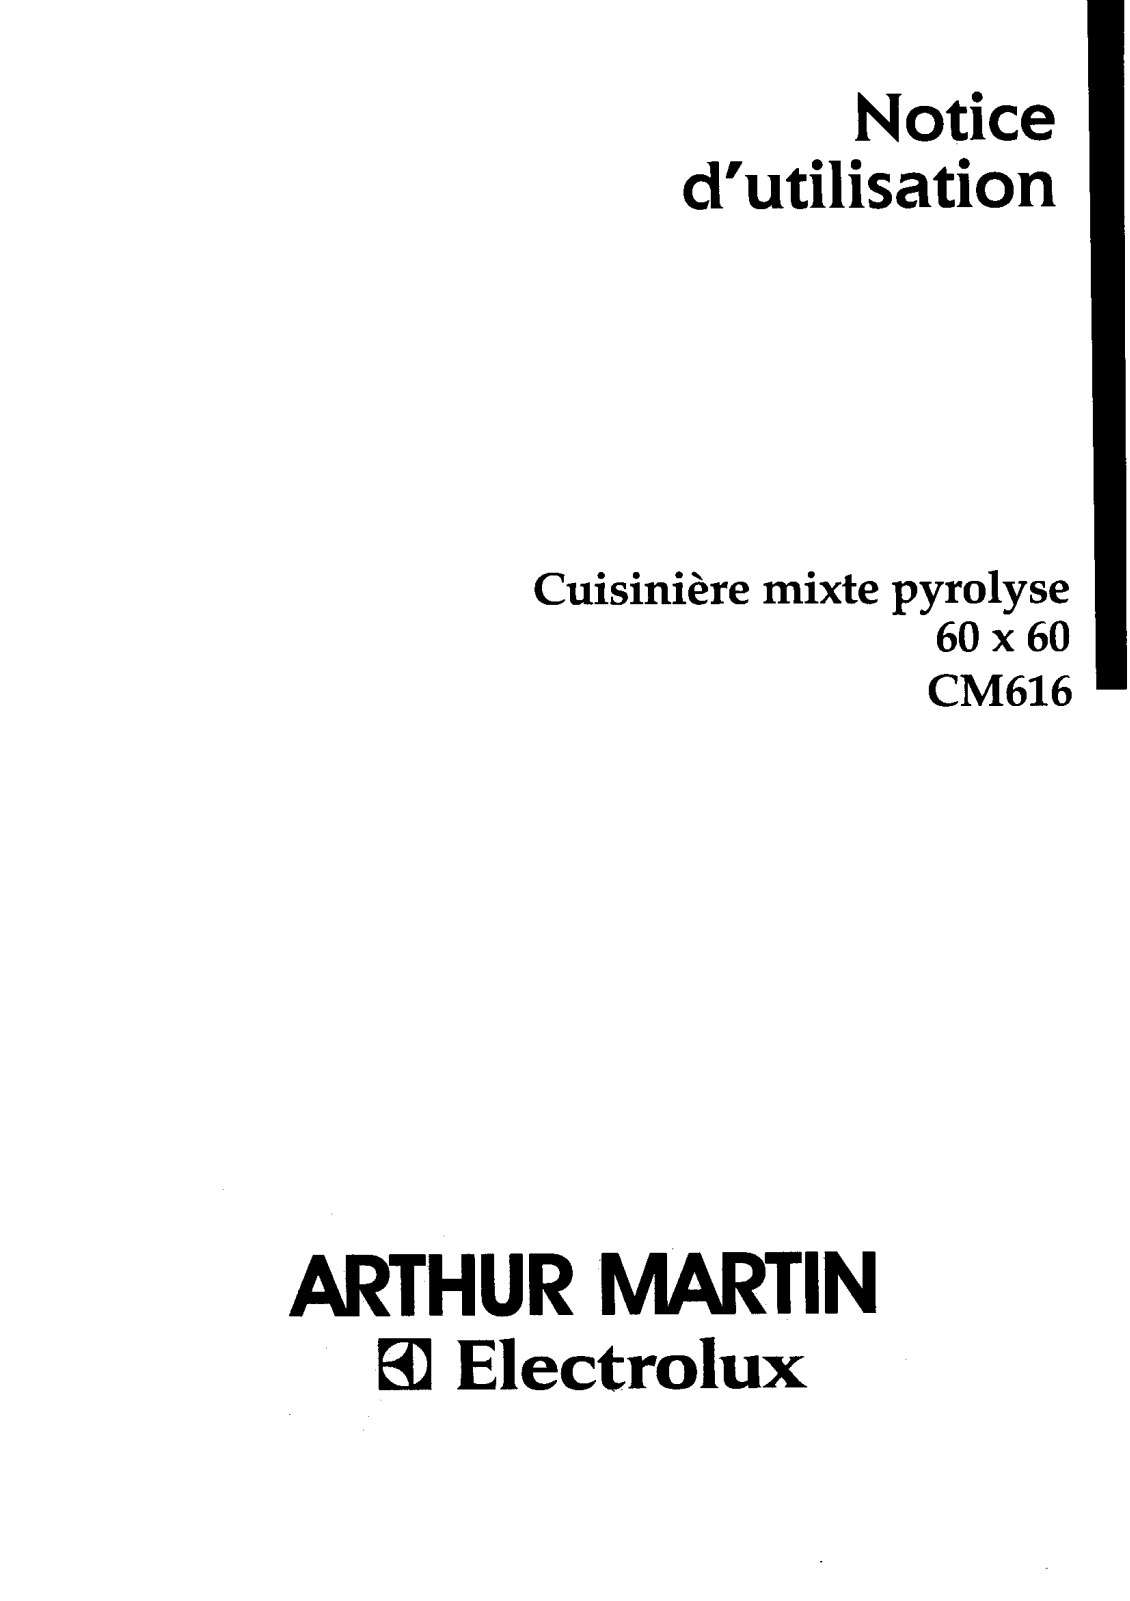 Arthur martin CM616 User Manual